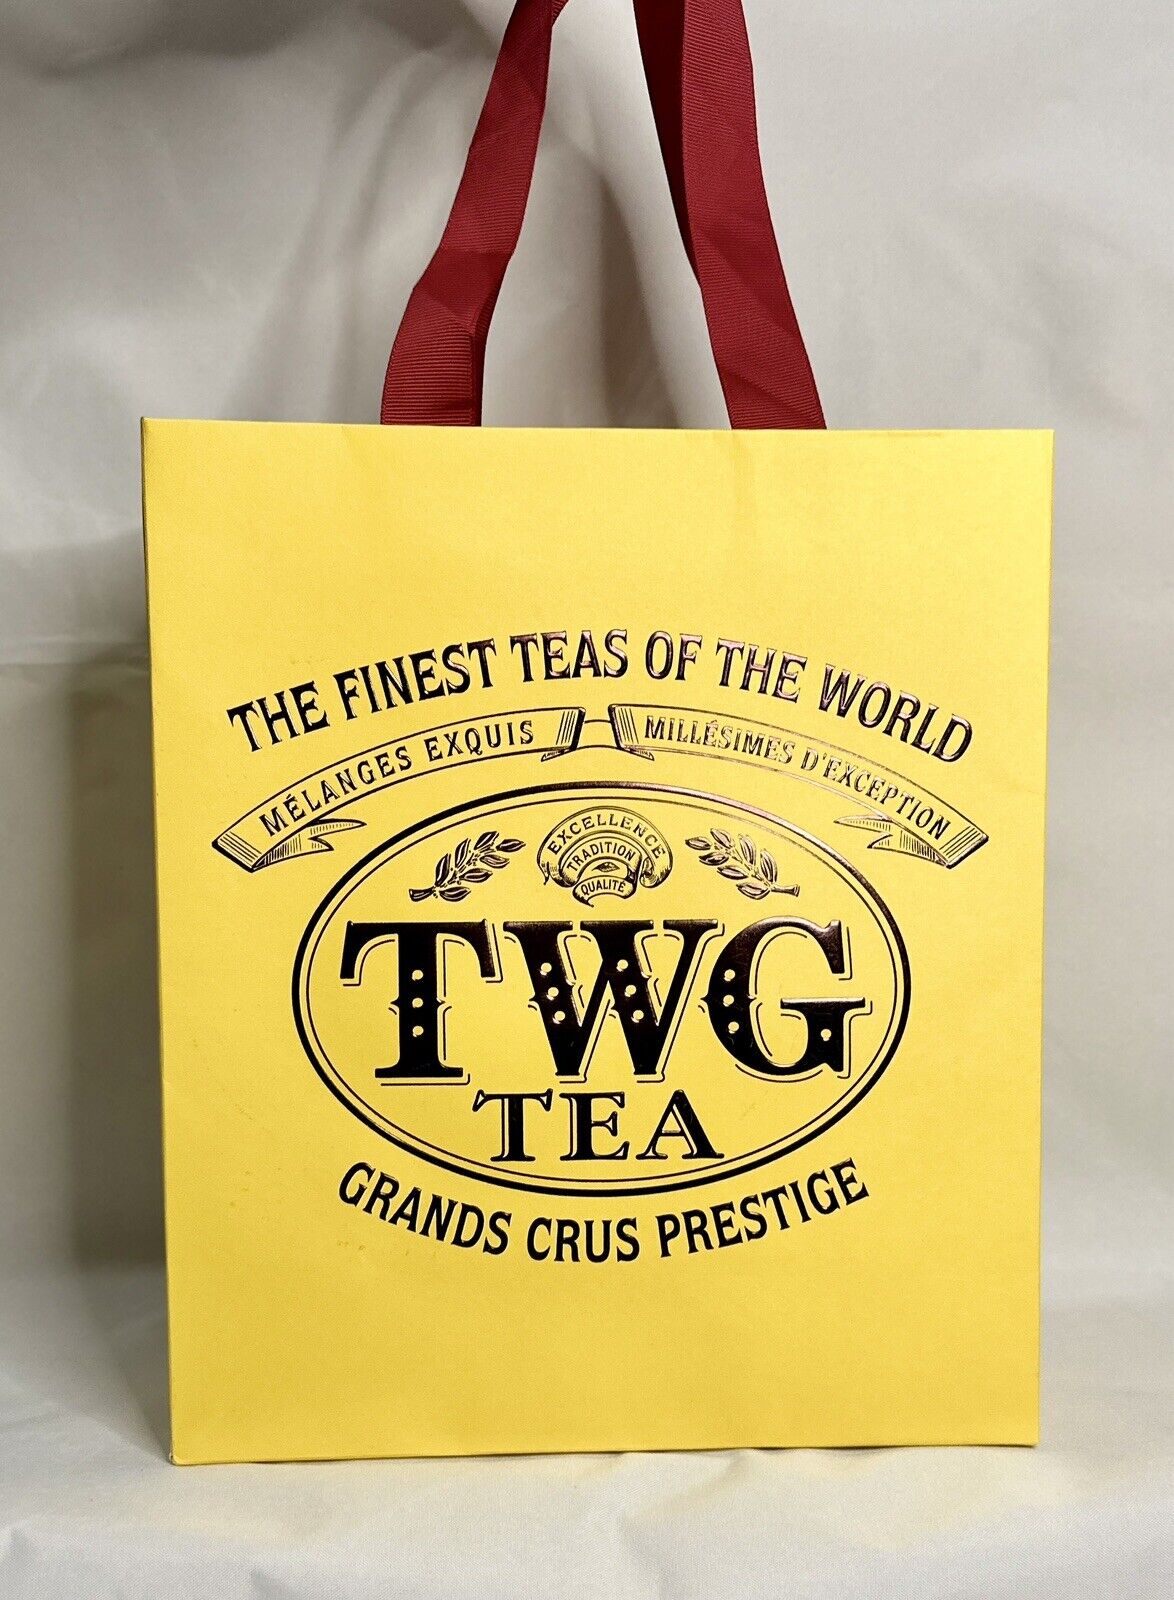 TWG Teas Singapore The Finest Teas of the World Retail Bag 9.5x11x4”